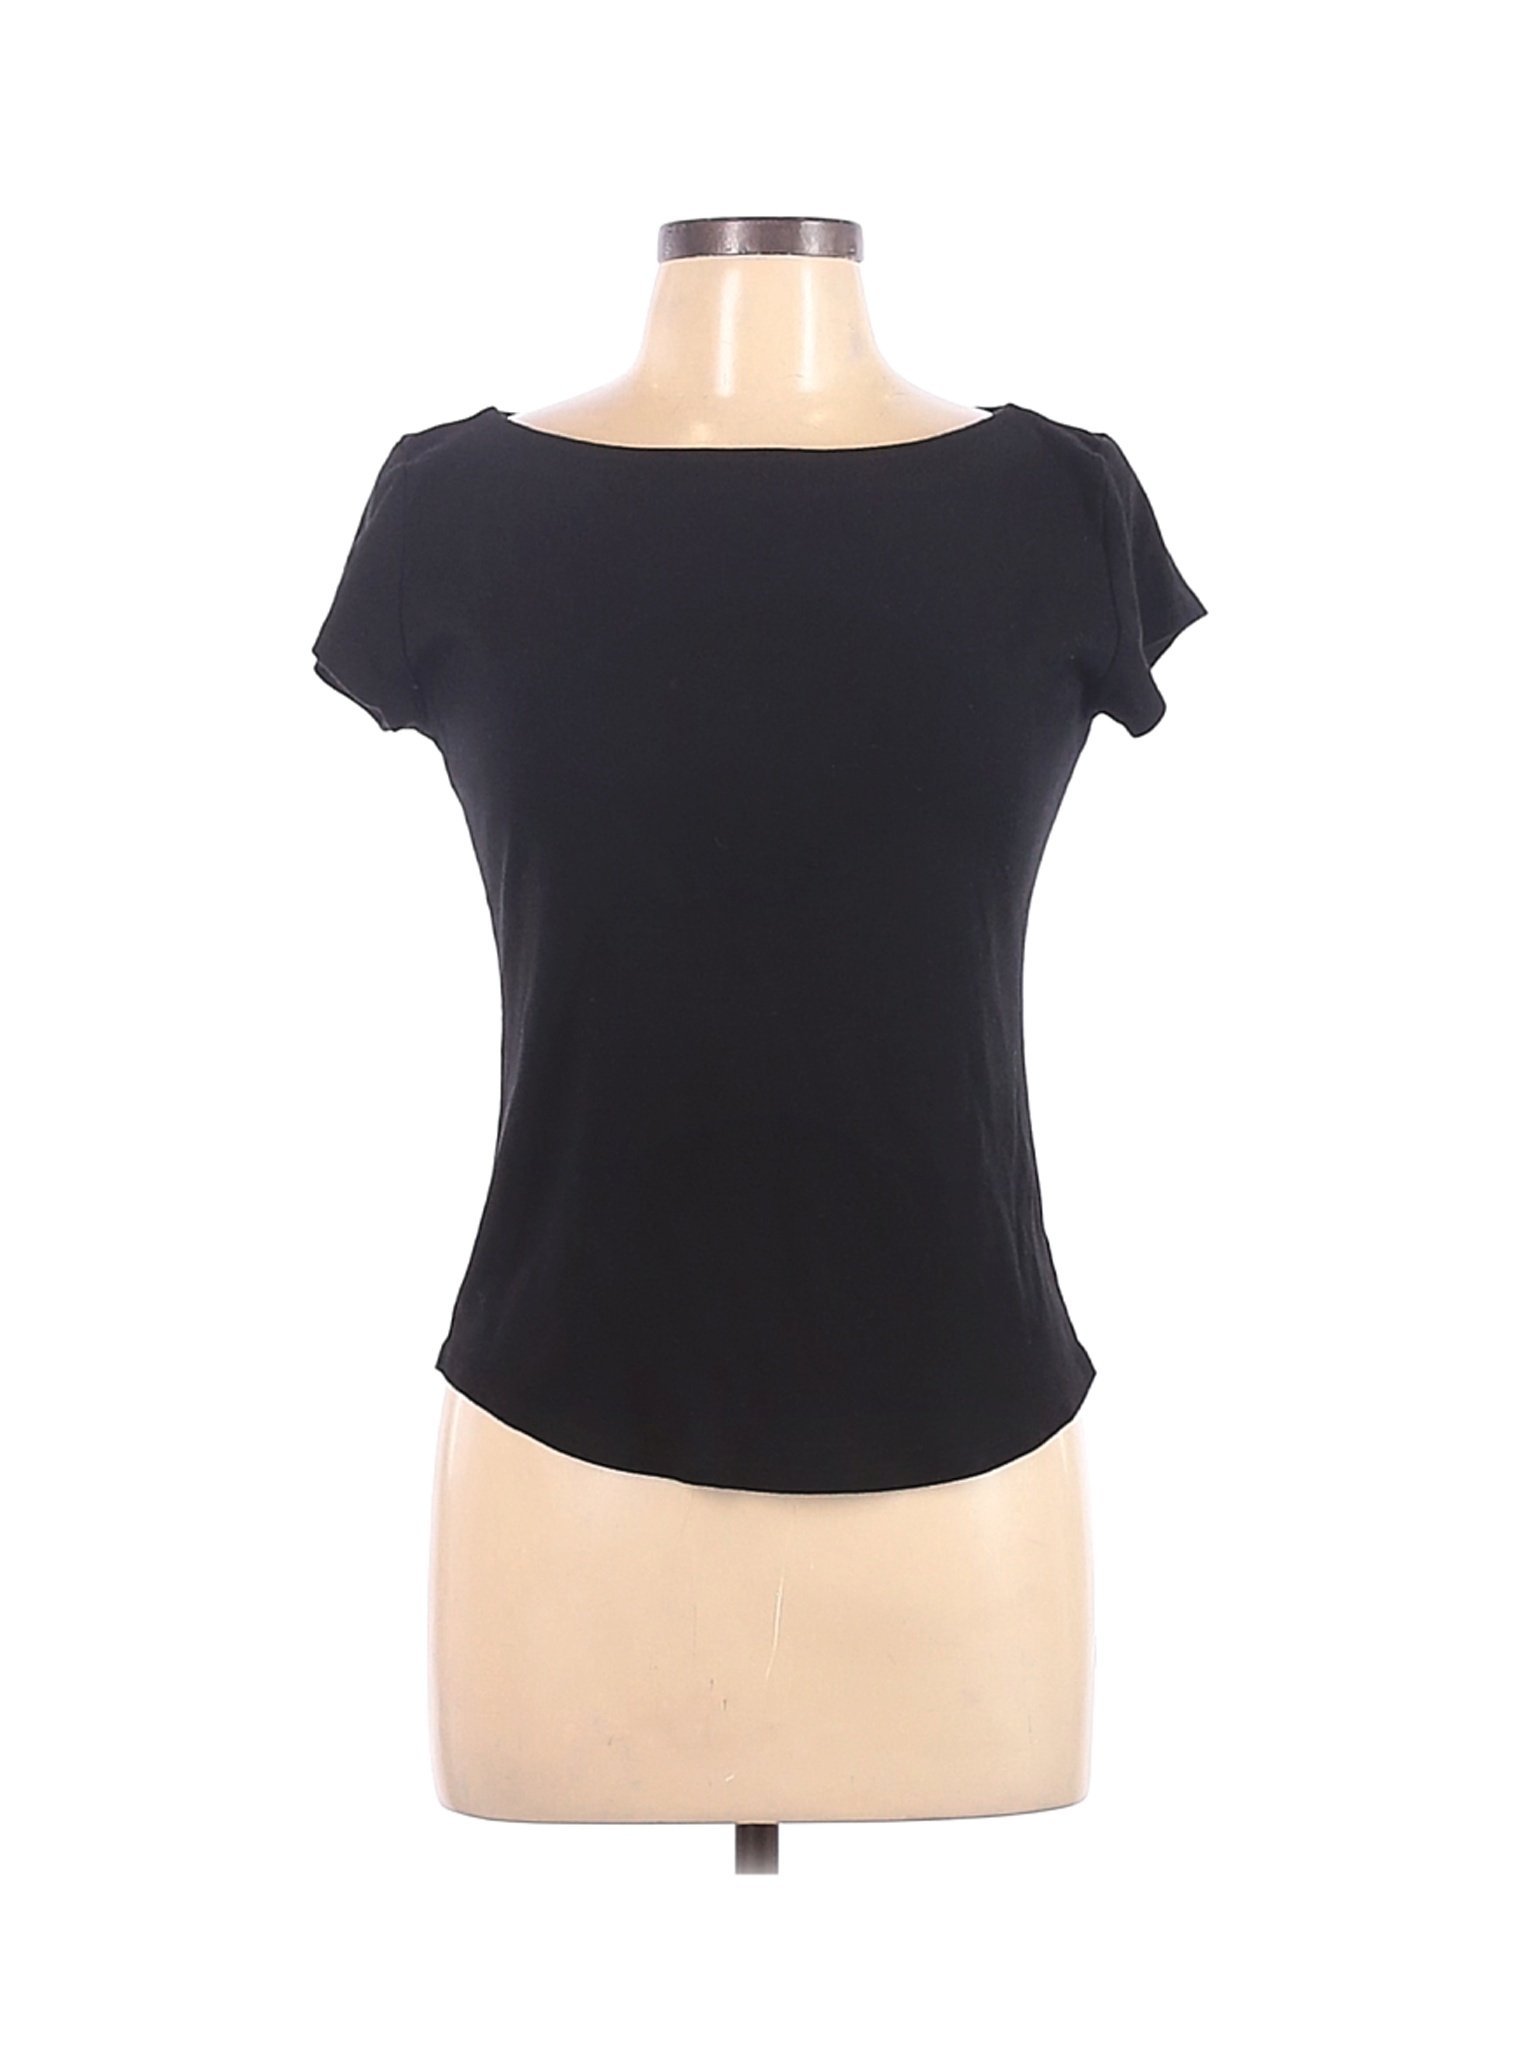 Premise Studio Women Black Short Sleeve Top L | eBay